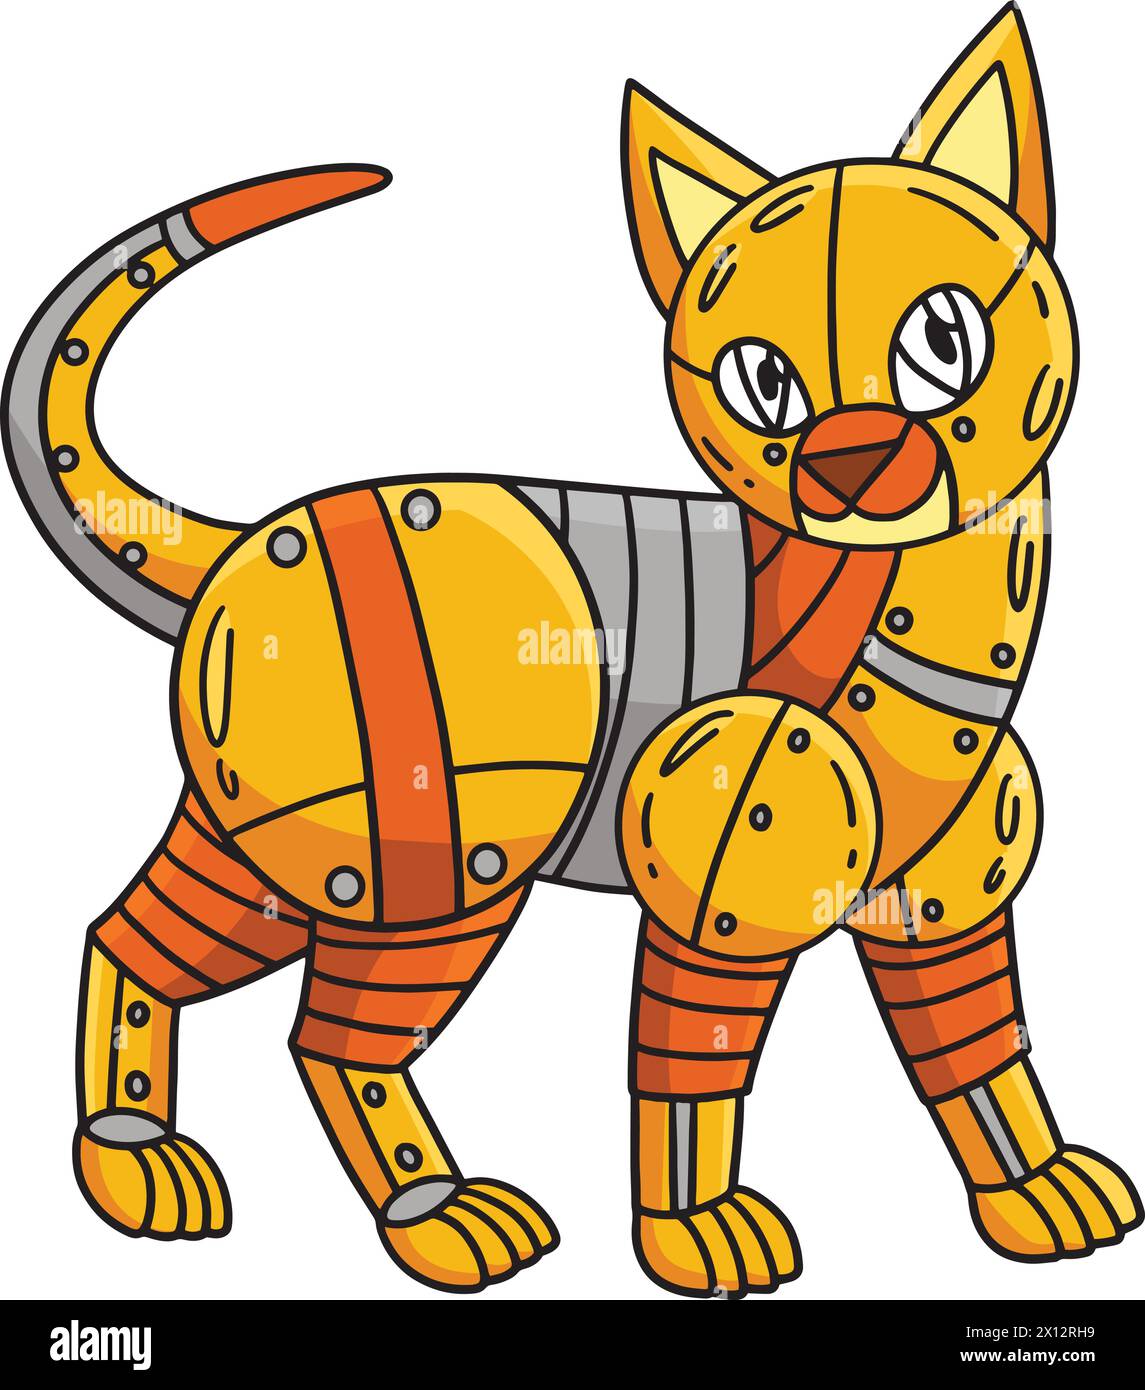 Robot Cat Cartoon Colored Clipart Illustration Stock Vector